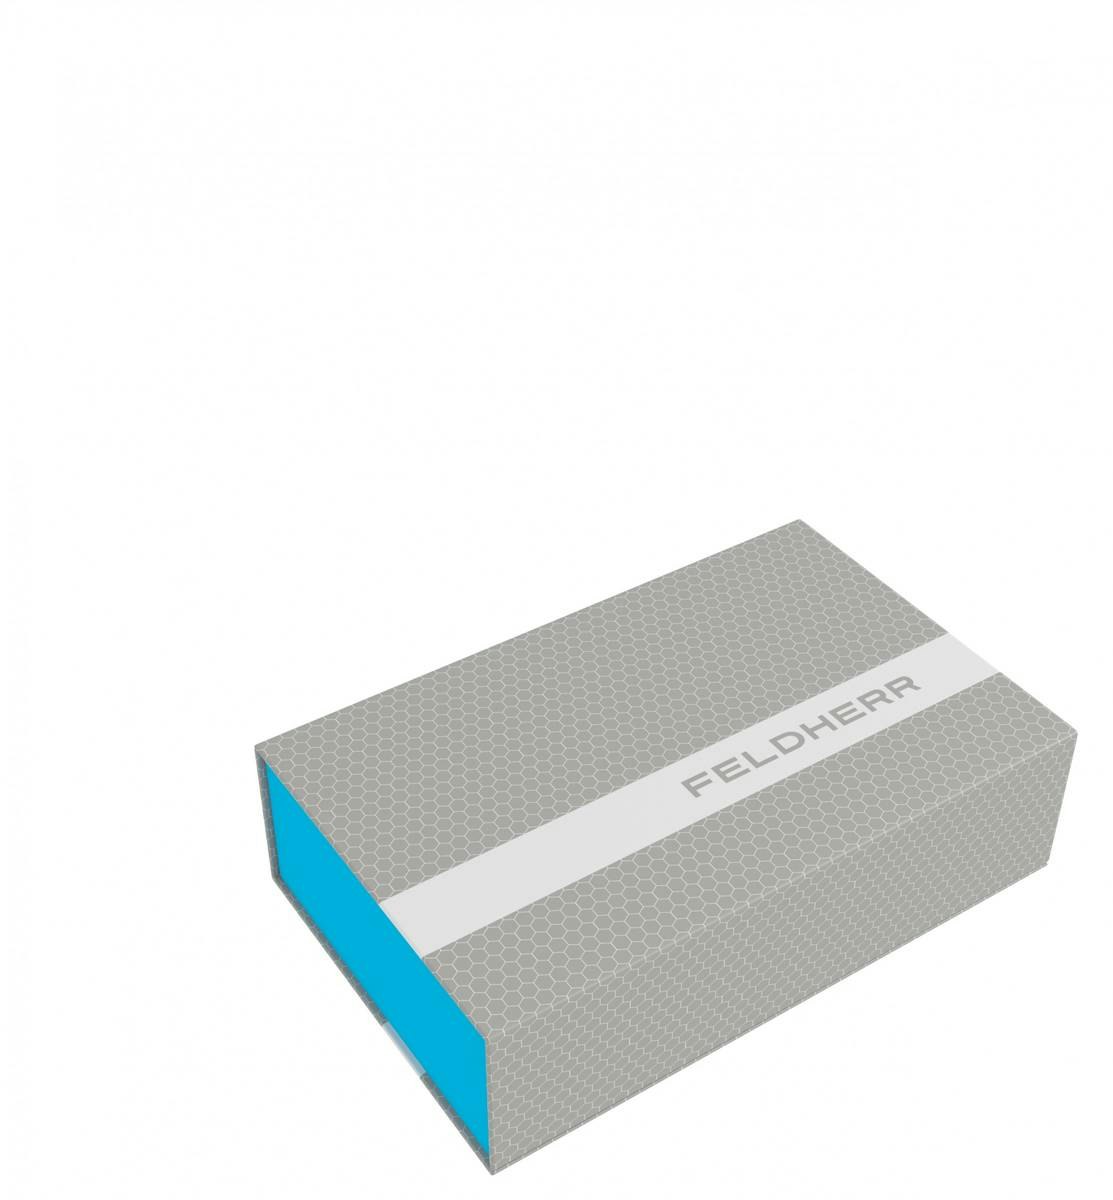 Feldherr Magnetic Box blue Half-Size 75 mm empty - HSMB075